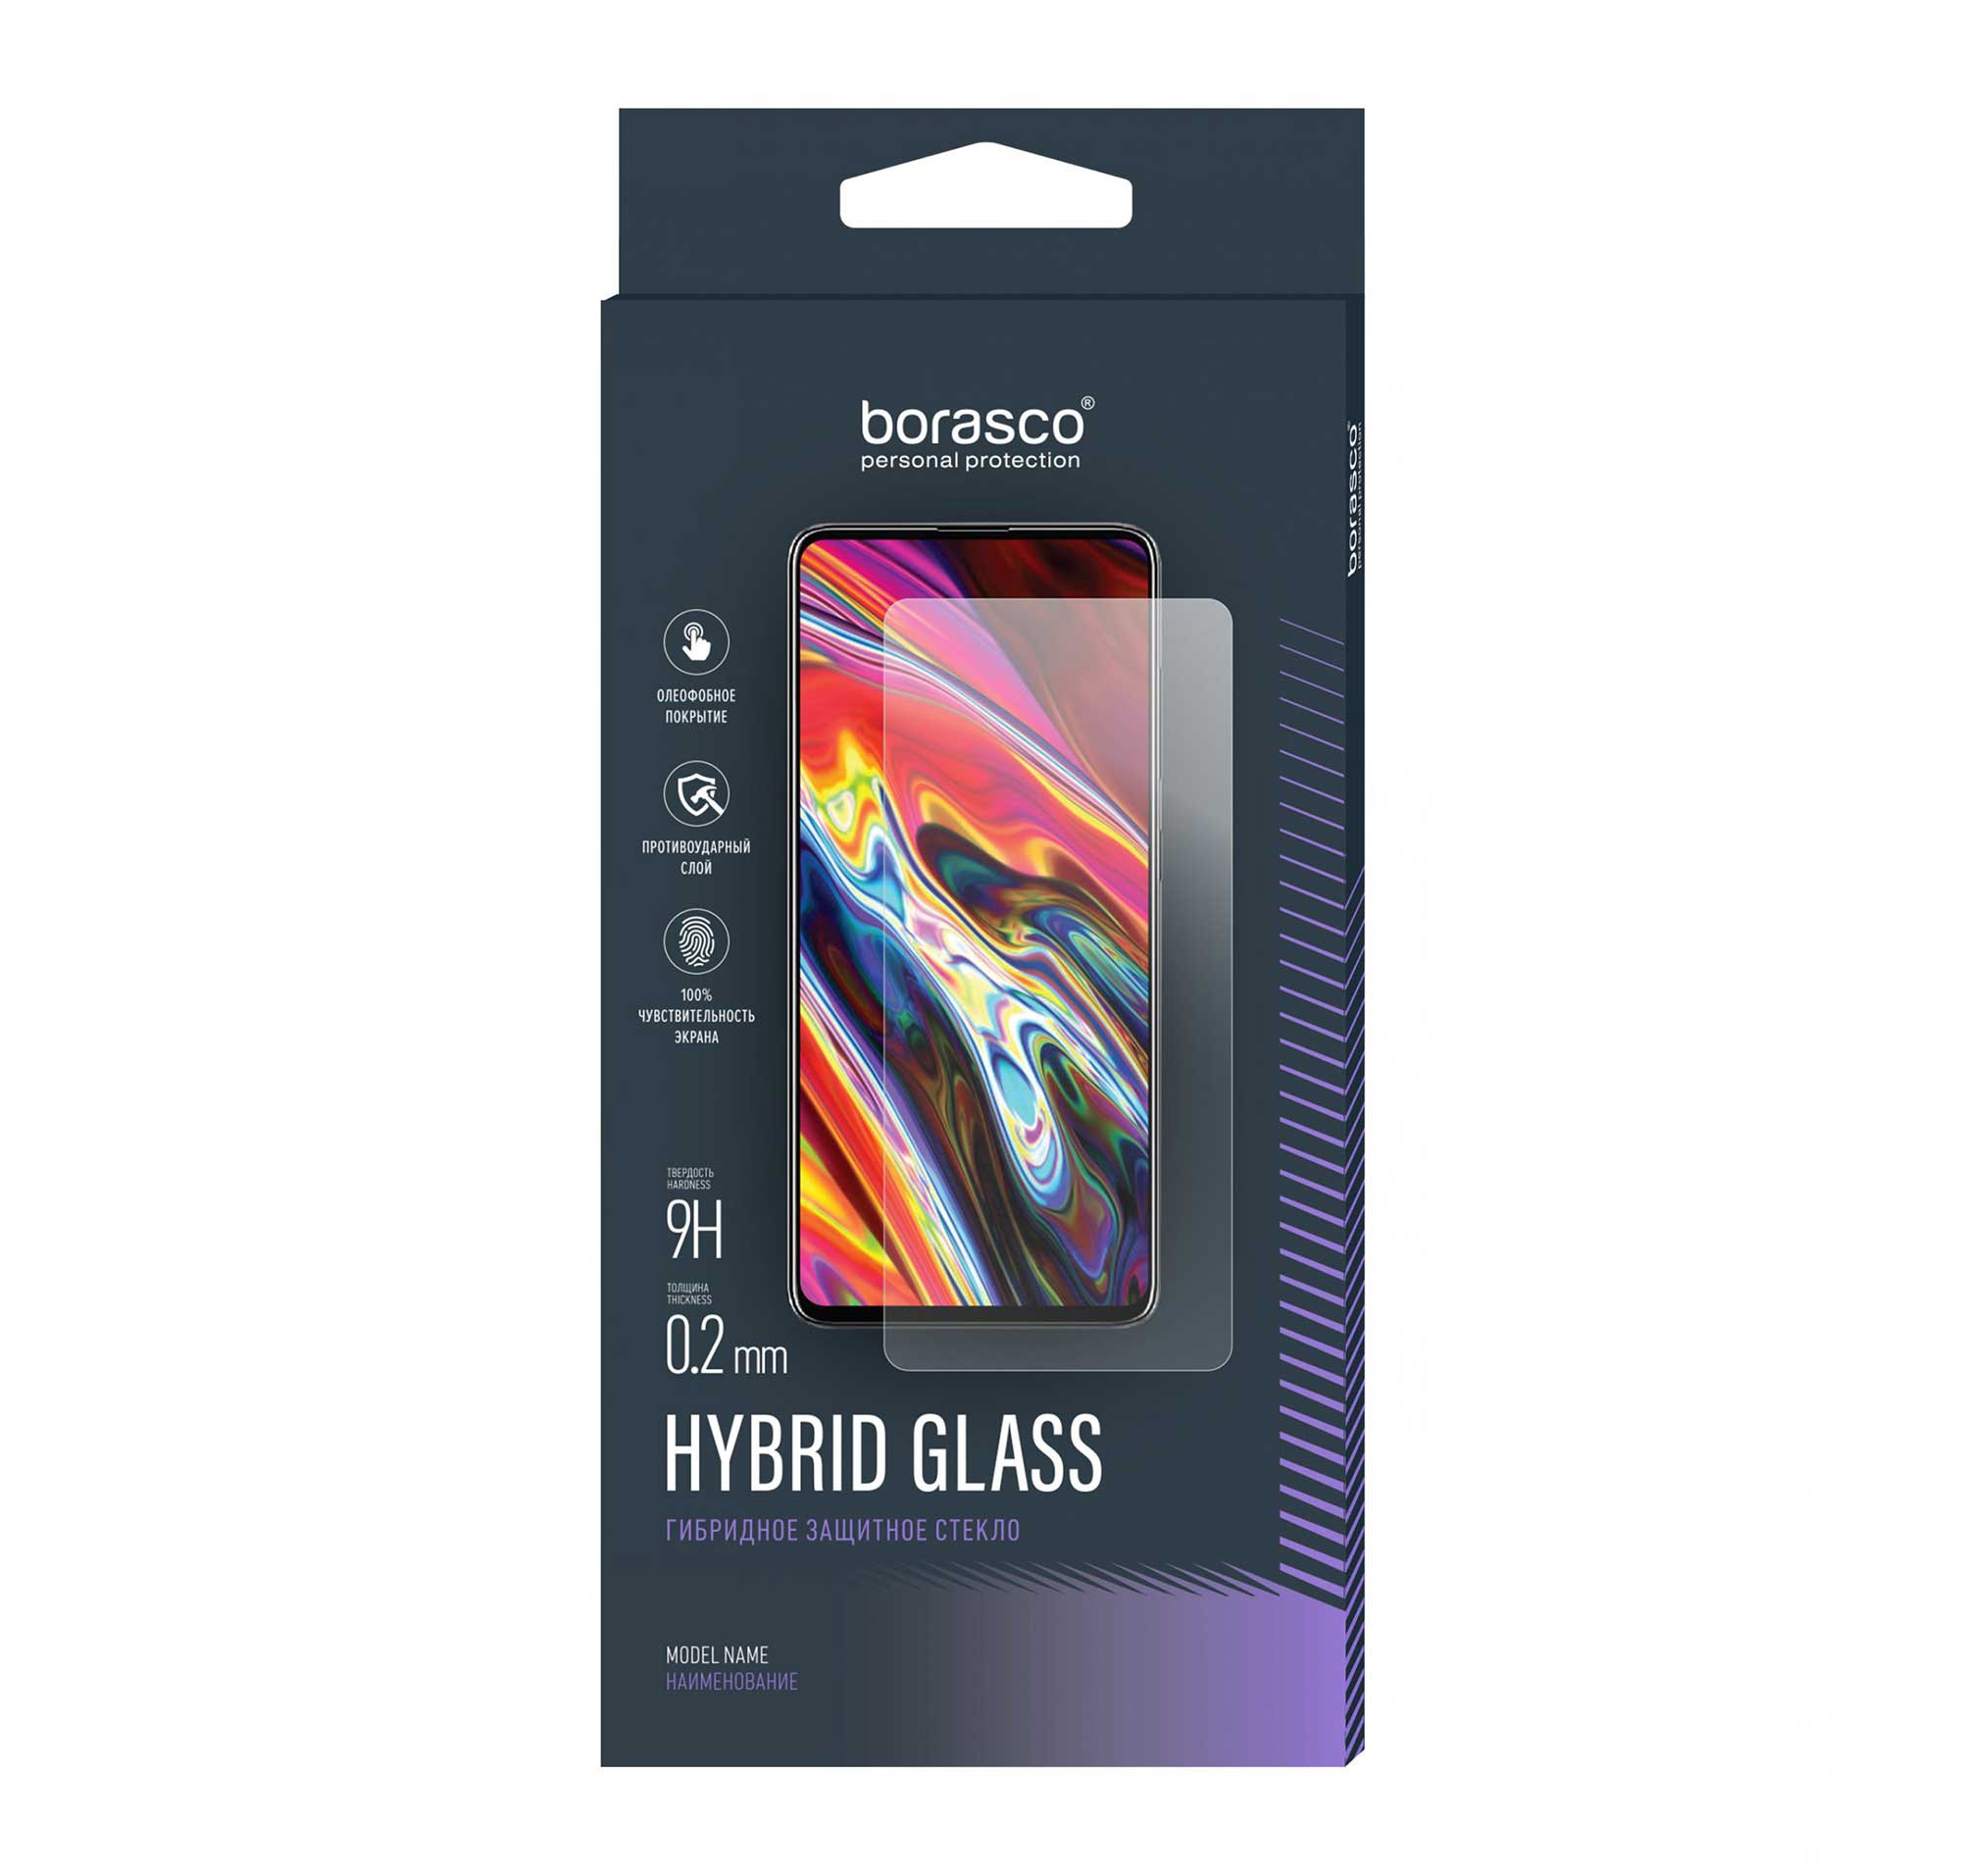 Защитное стекло BoraSCO Hybrid Glass для Sony Xperia XA1 Ultra 2 шт закаленное стекло для защиты экрана для sony xperia l1 l2 l3 l4 c3 c4 e3 e4 e5 m5 t2 t3 x xa xa1 xa2 xz 5 ii ultra